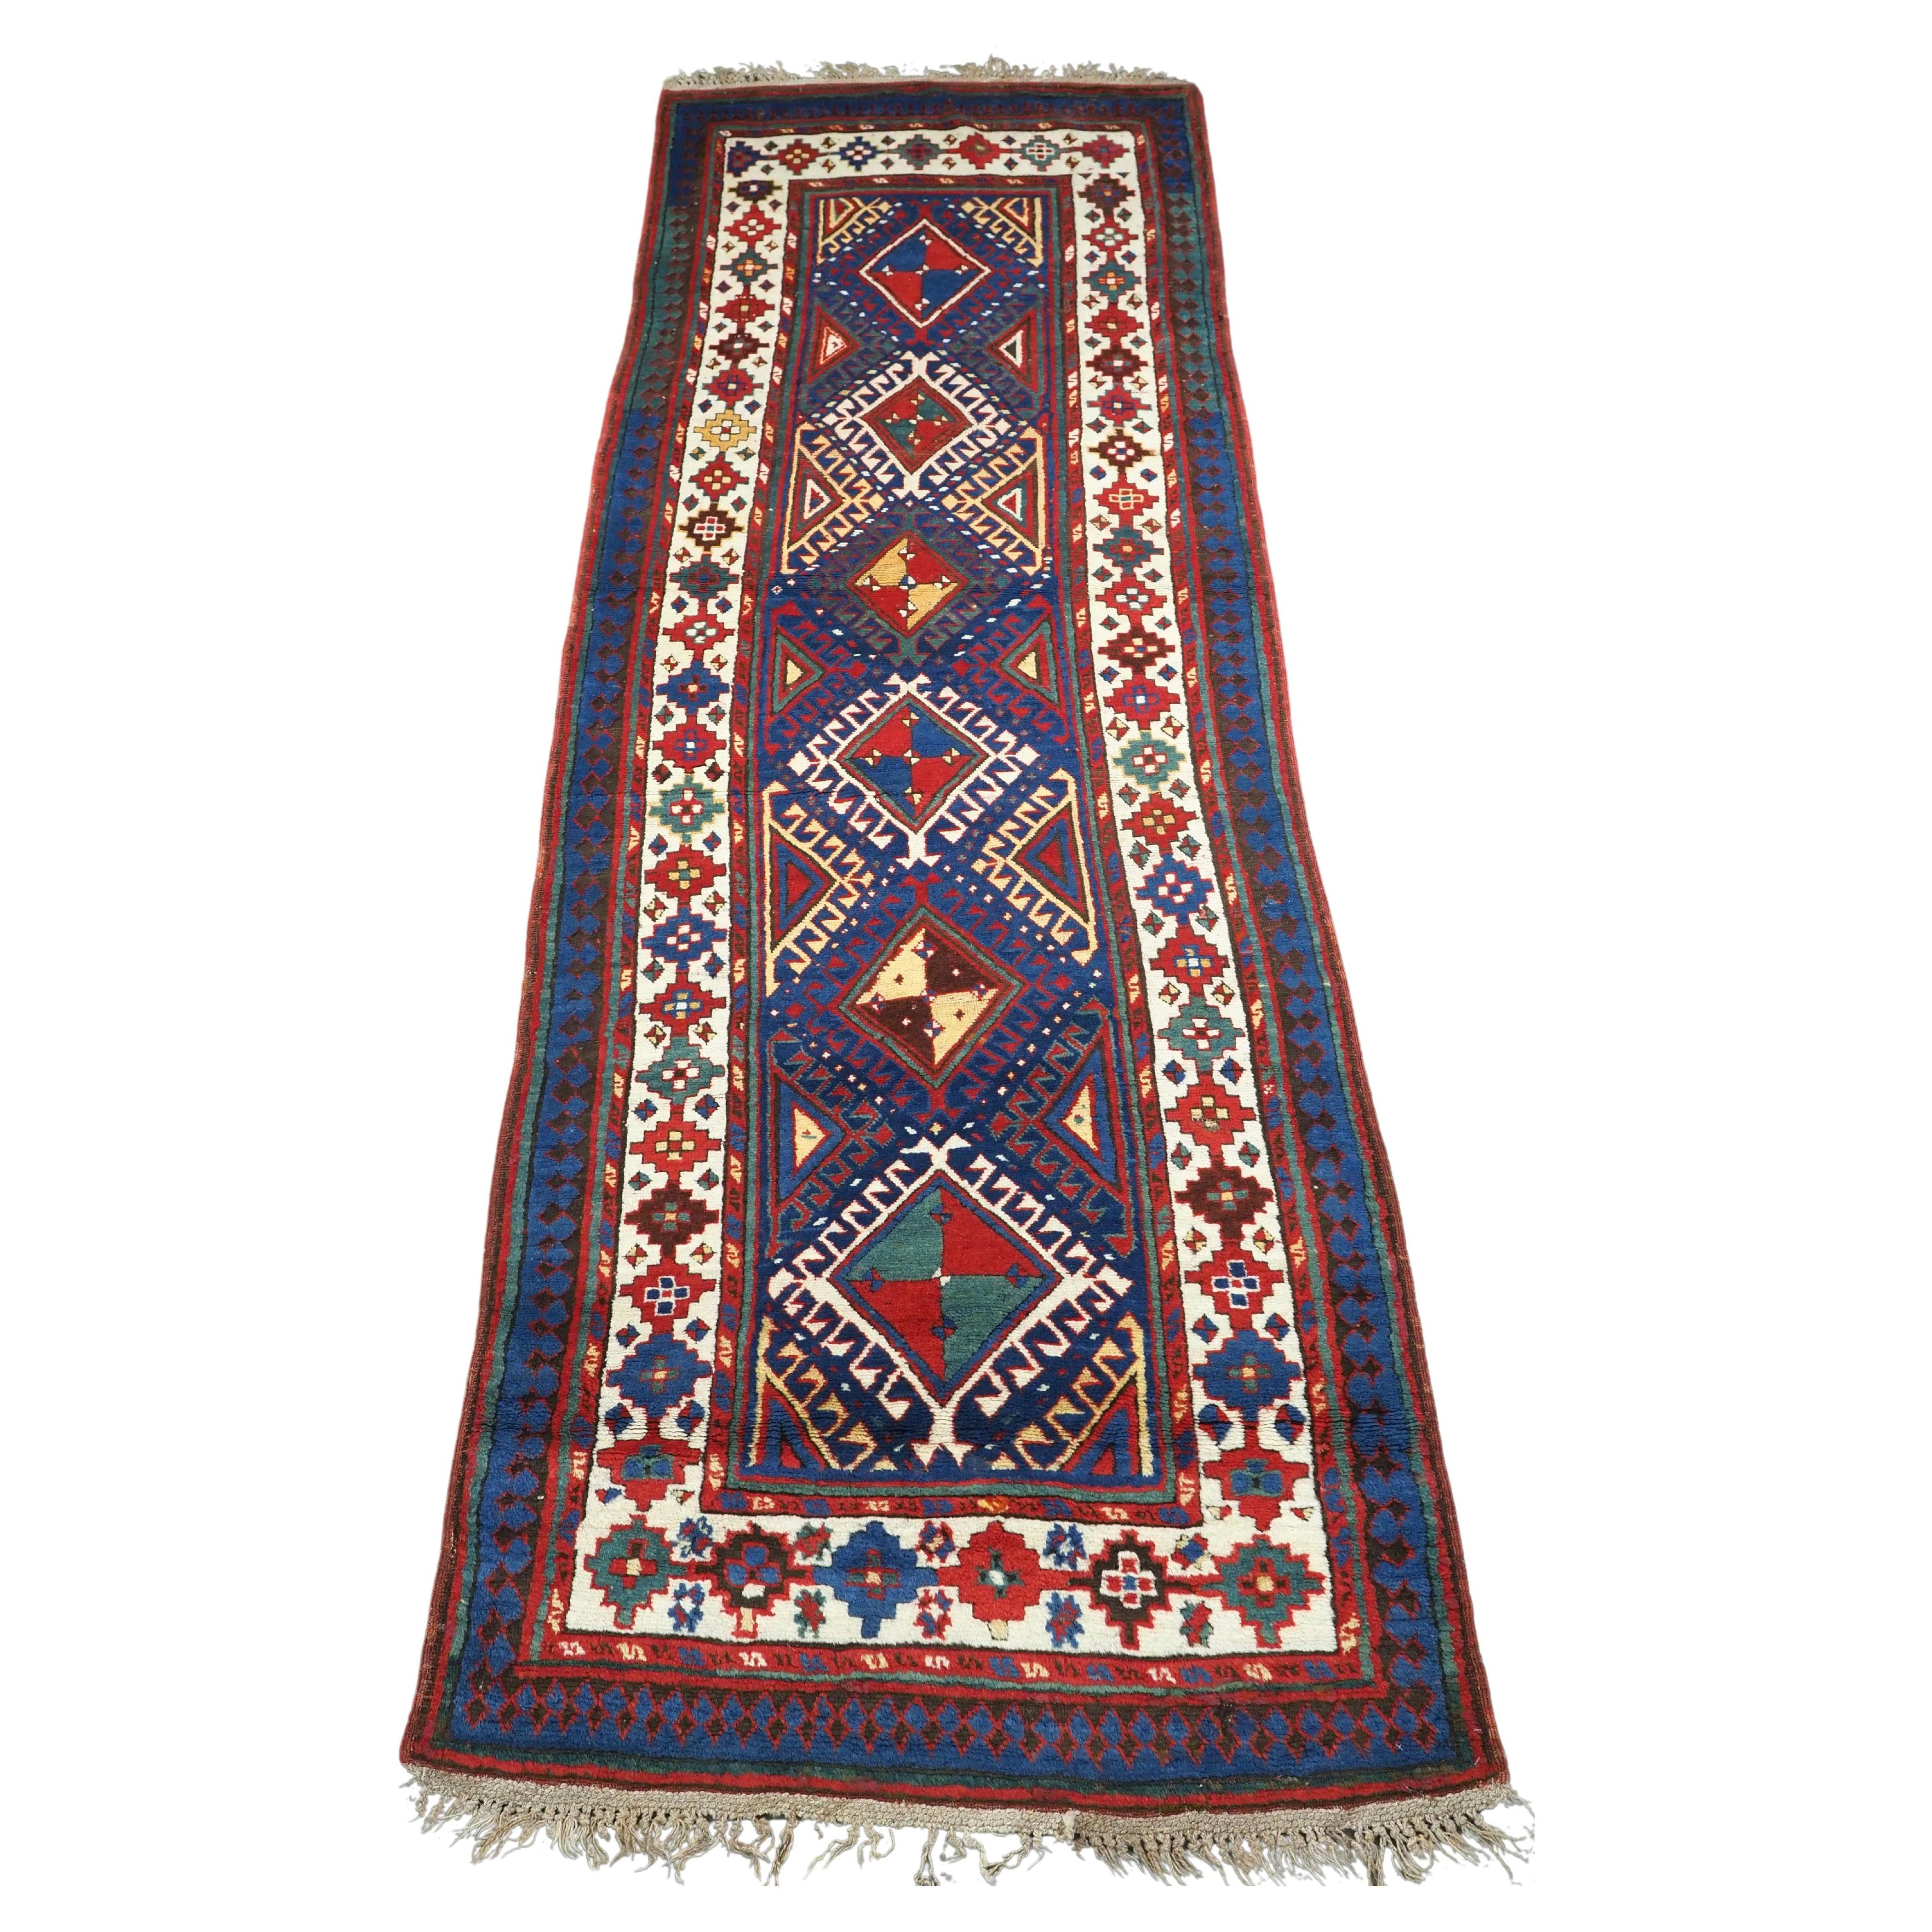 Ancien tapis long / chemin de table Moghan Kazak du Caucase, vers 1880.